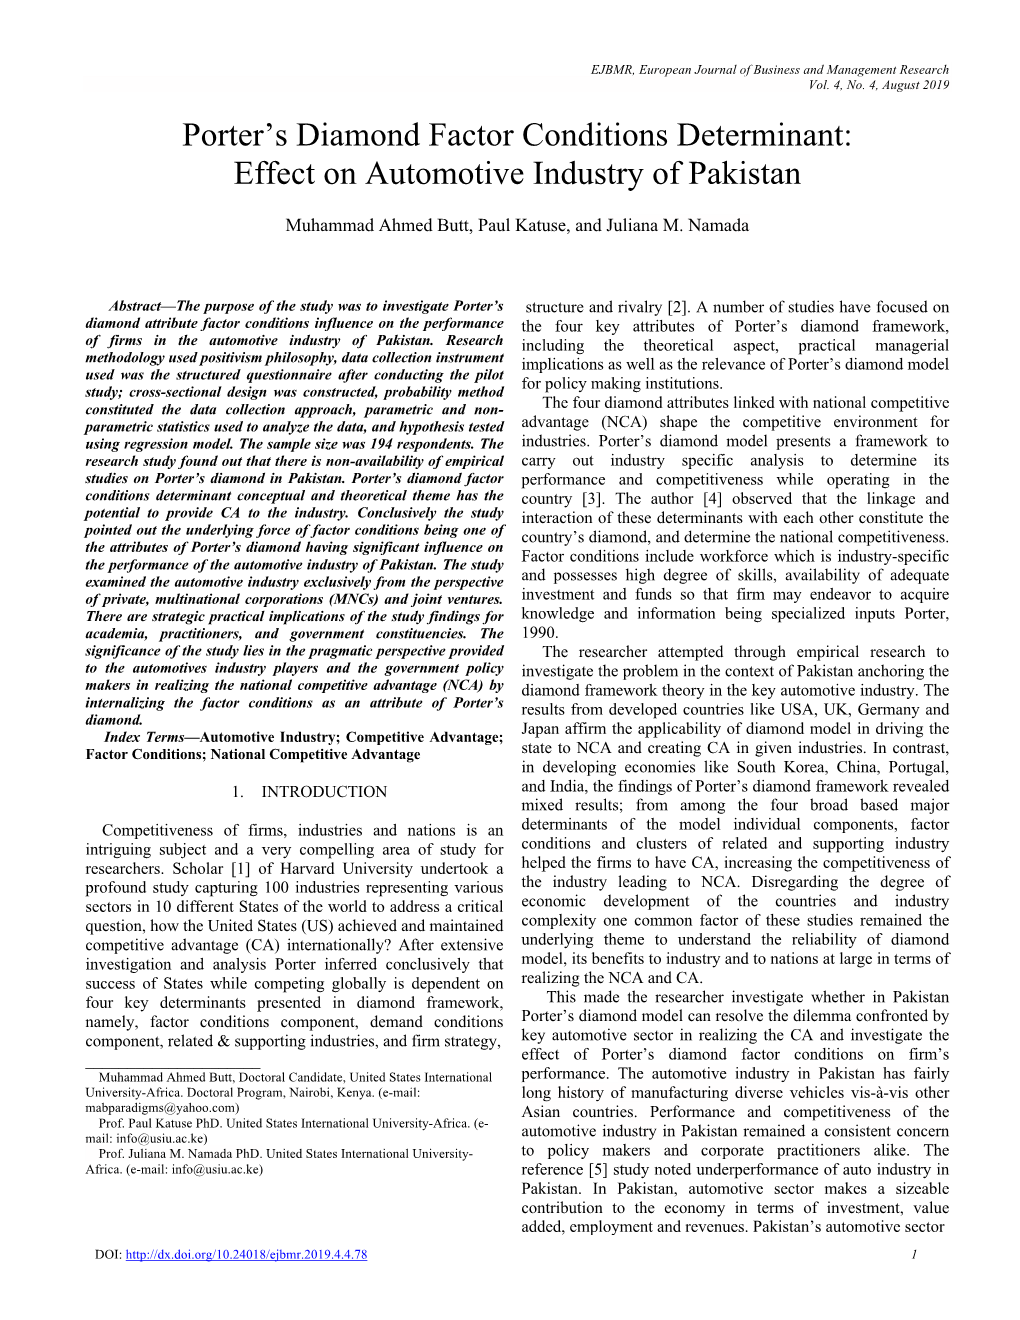 Porter's Diamond Factor Conditions Determinant: Effect on Automotive Industry of Pakistan